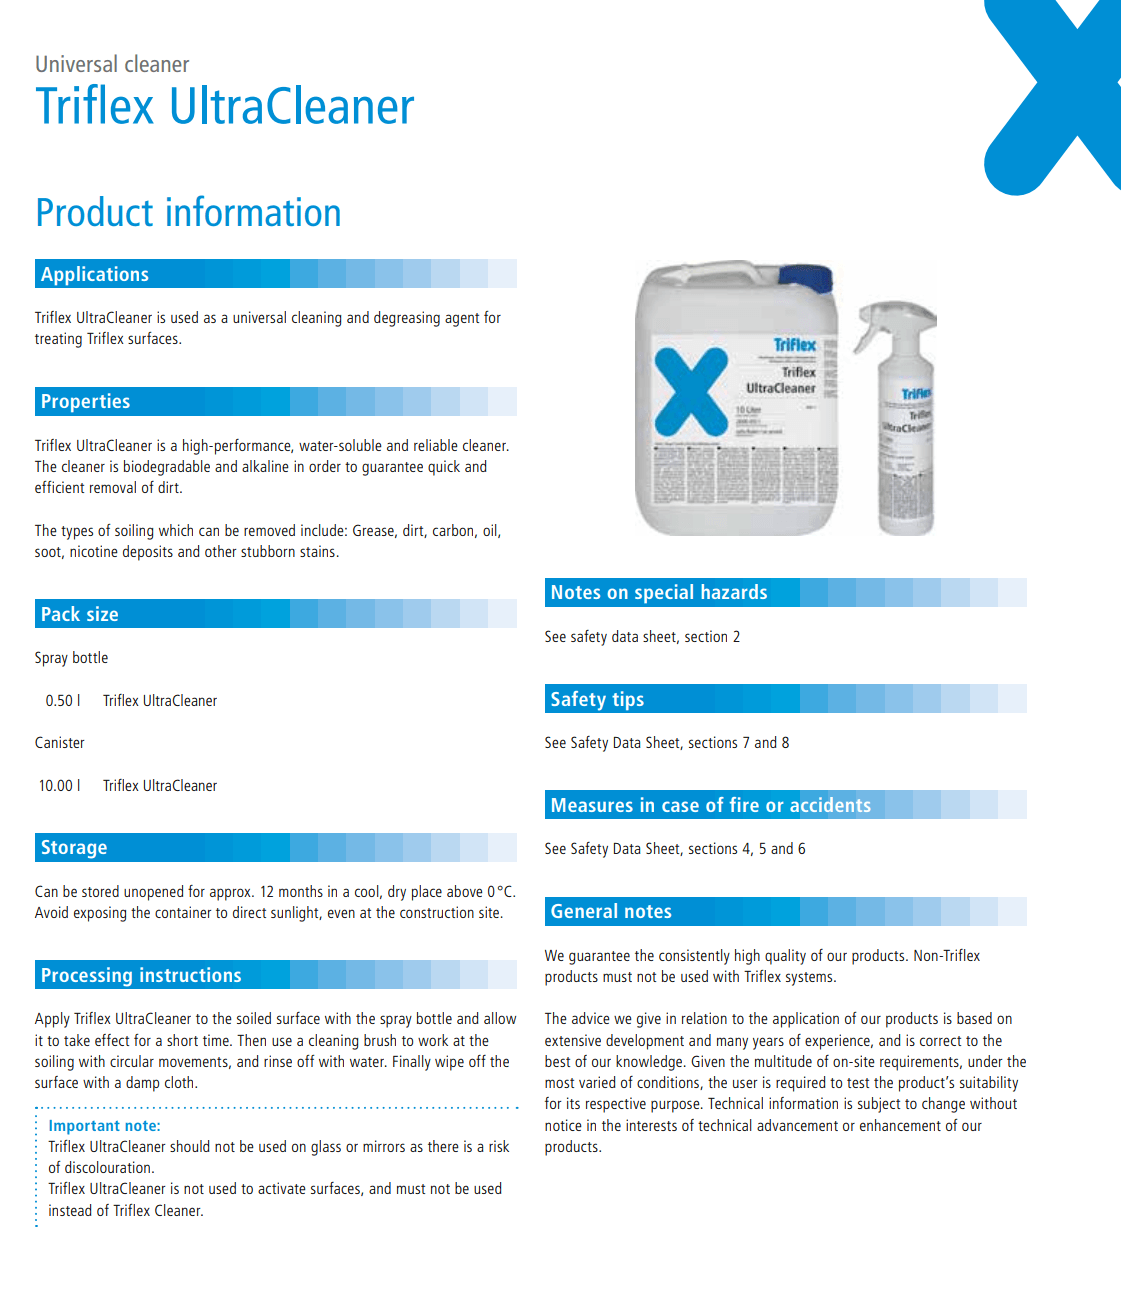 PI Triflex UltraCleaner 20-11 EN.png